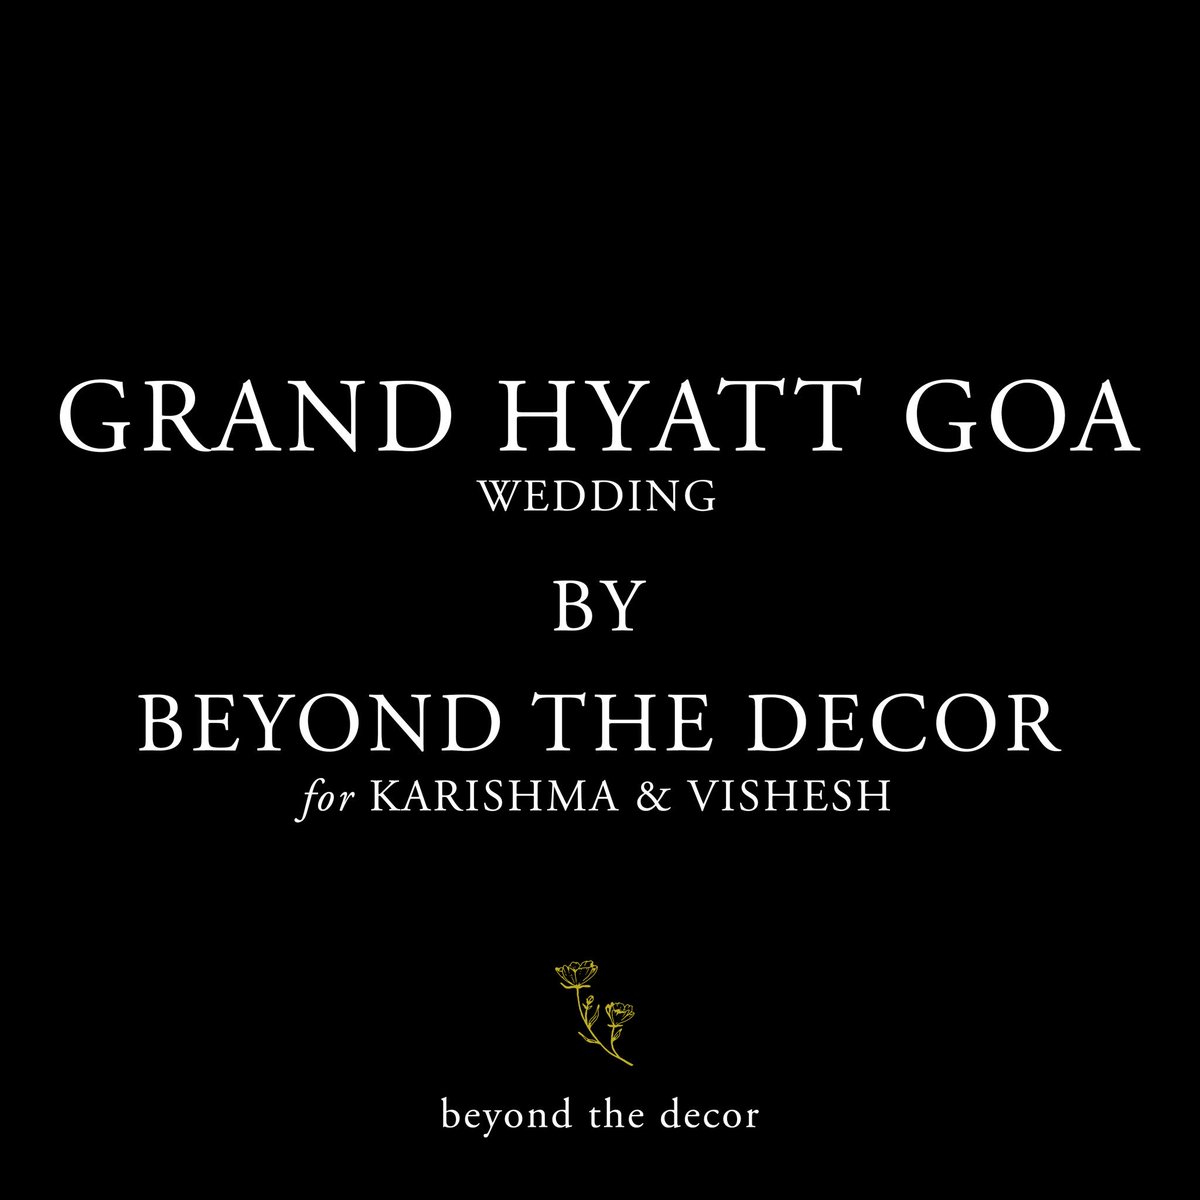 GRAND HYATT GOA WEDDING | KARISHMA & VISHESH | BEYOND THE DECOR

OUT NOW! 👉 youtu.be/8c_3pSkvgLU